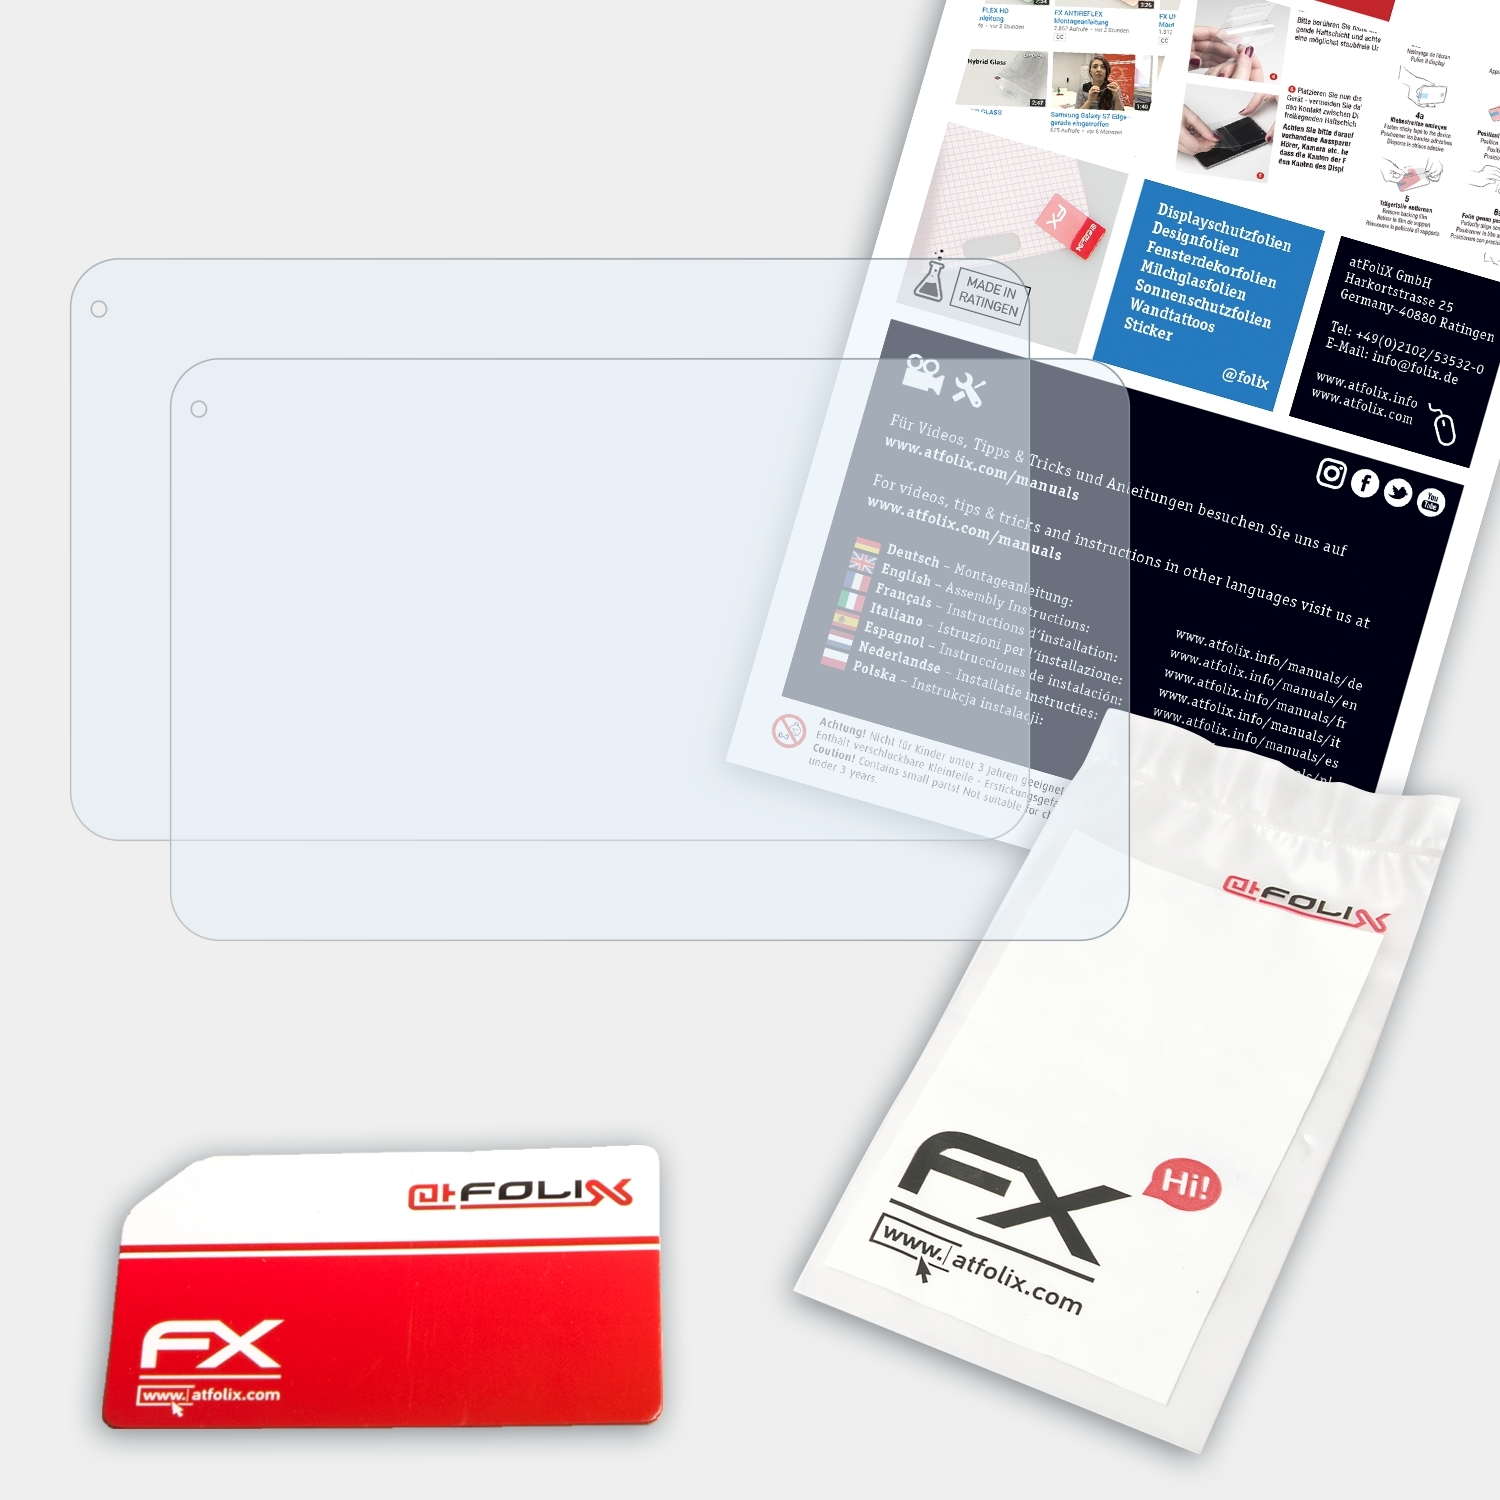 Displayschutz(für ATFOLIX Optimus LG (V900)) Pad 2x FX-Clear